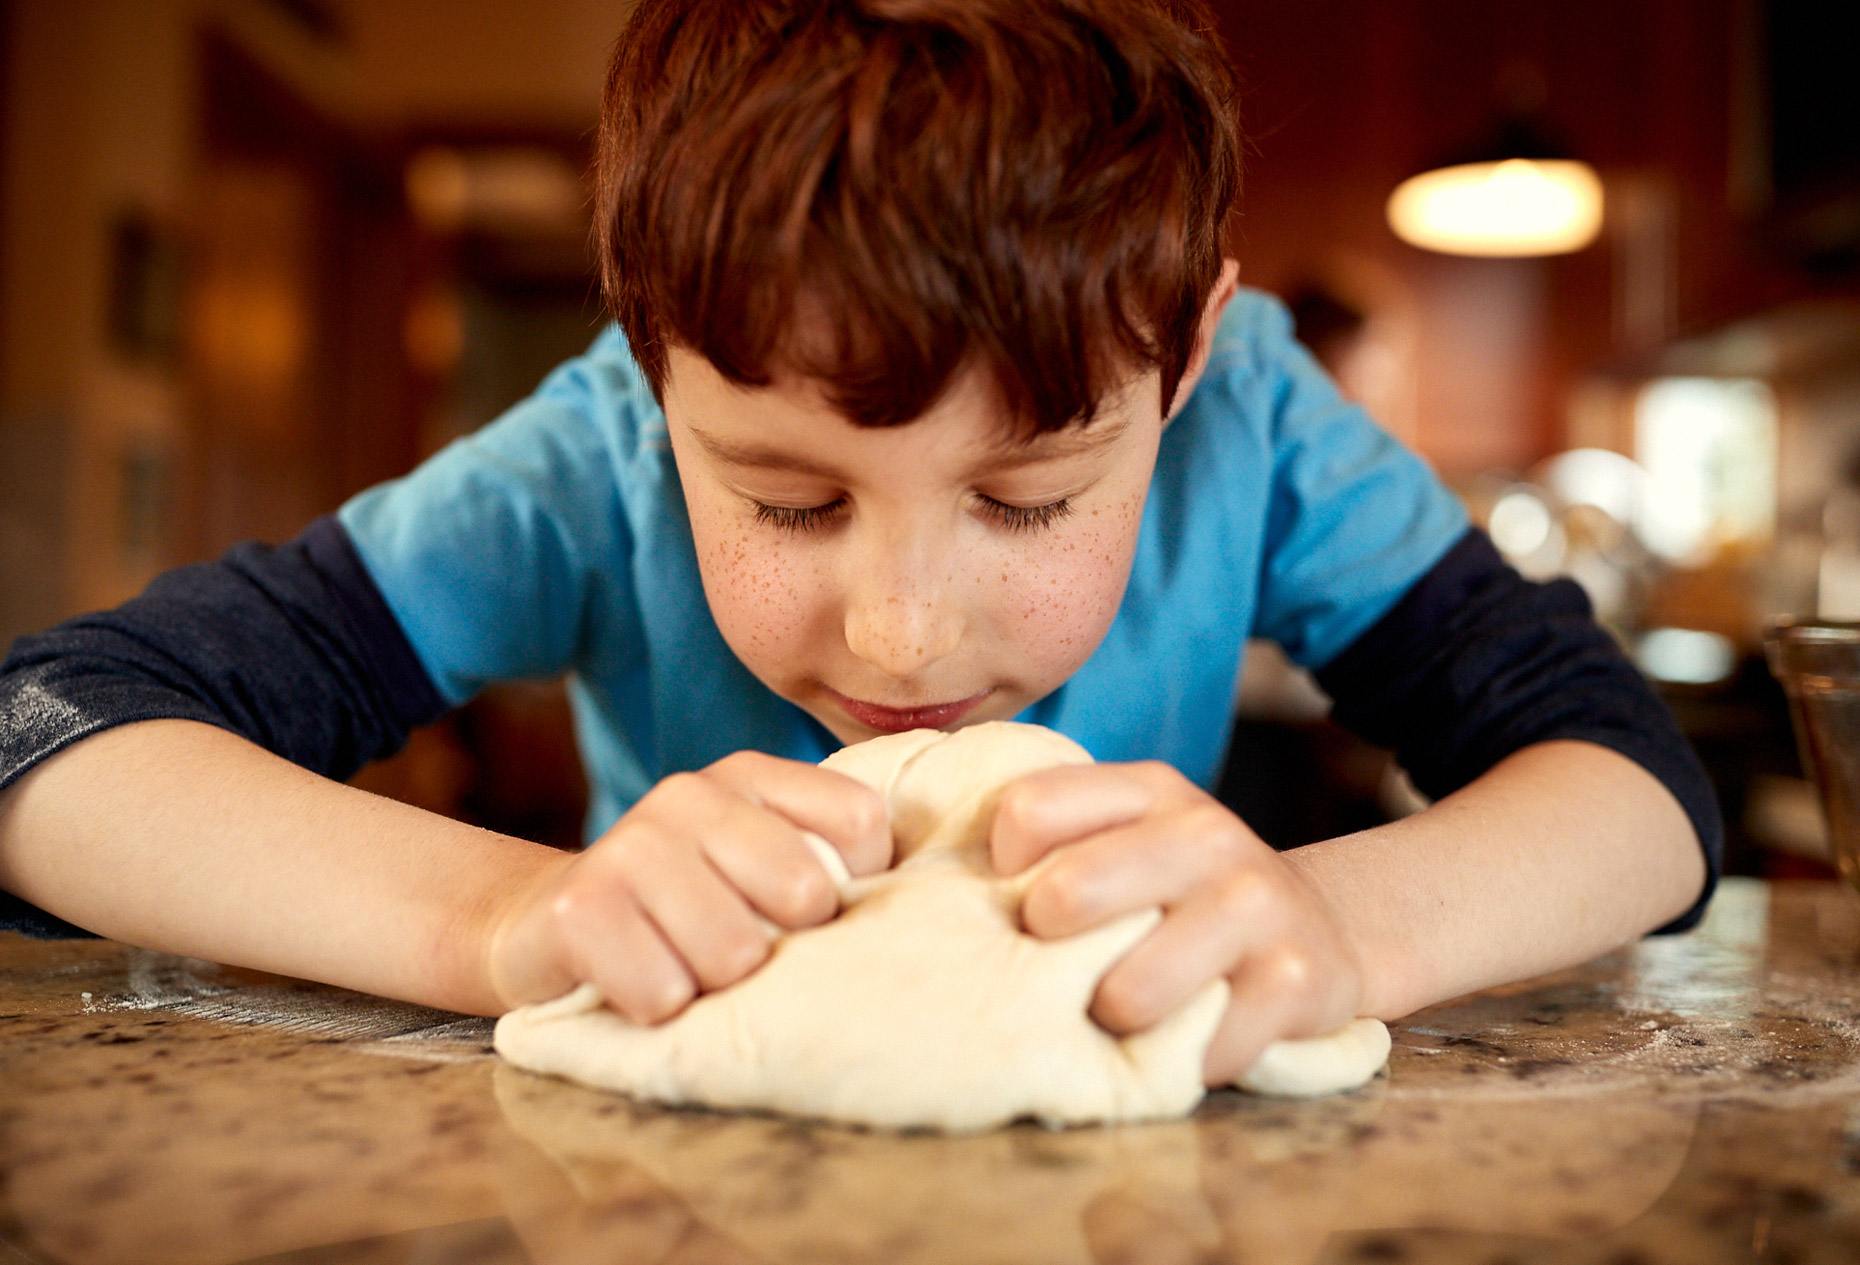 Boy kneading bread in kitchen | Childrens photography by Saverio Truglia